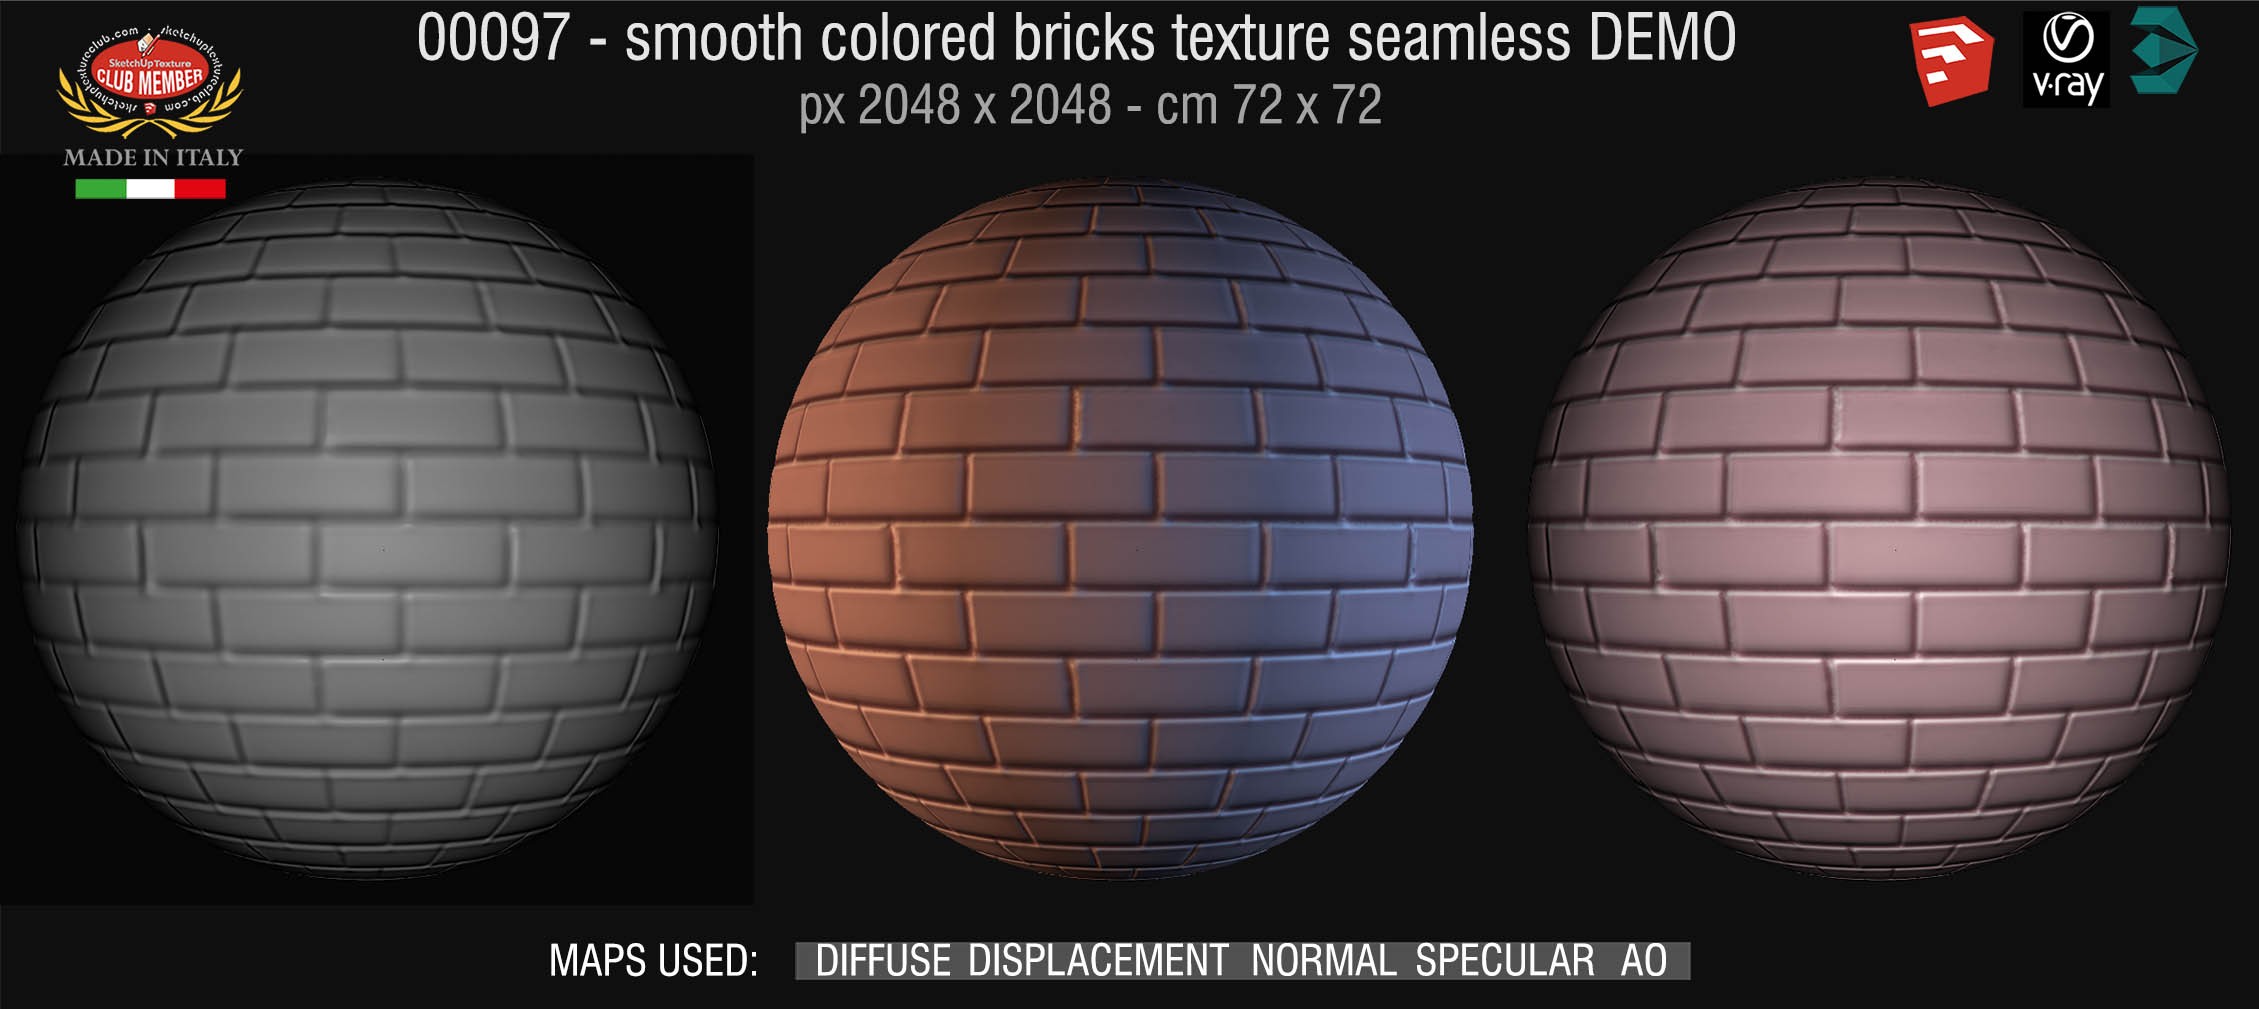 00097 smooth colored bricks texture seamless + maps DEMO